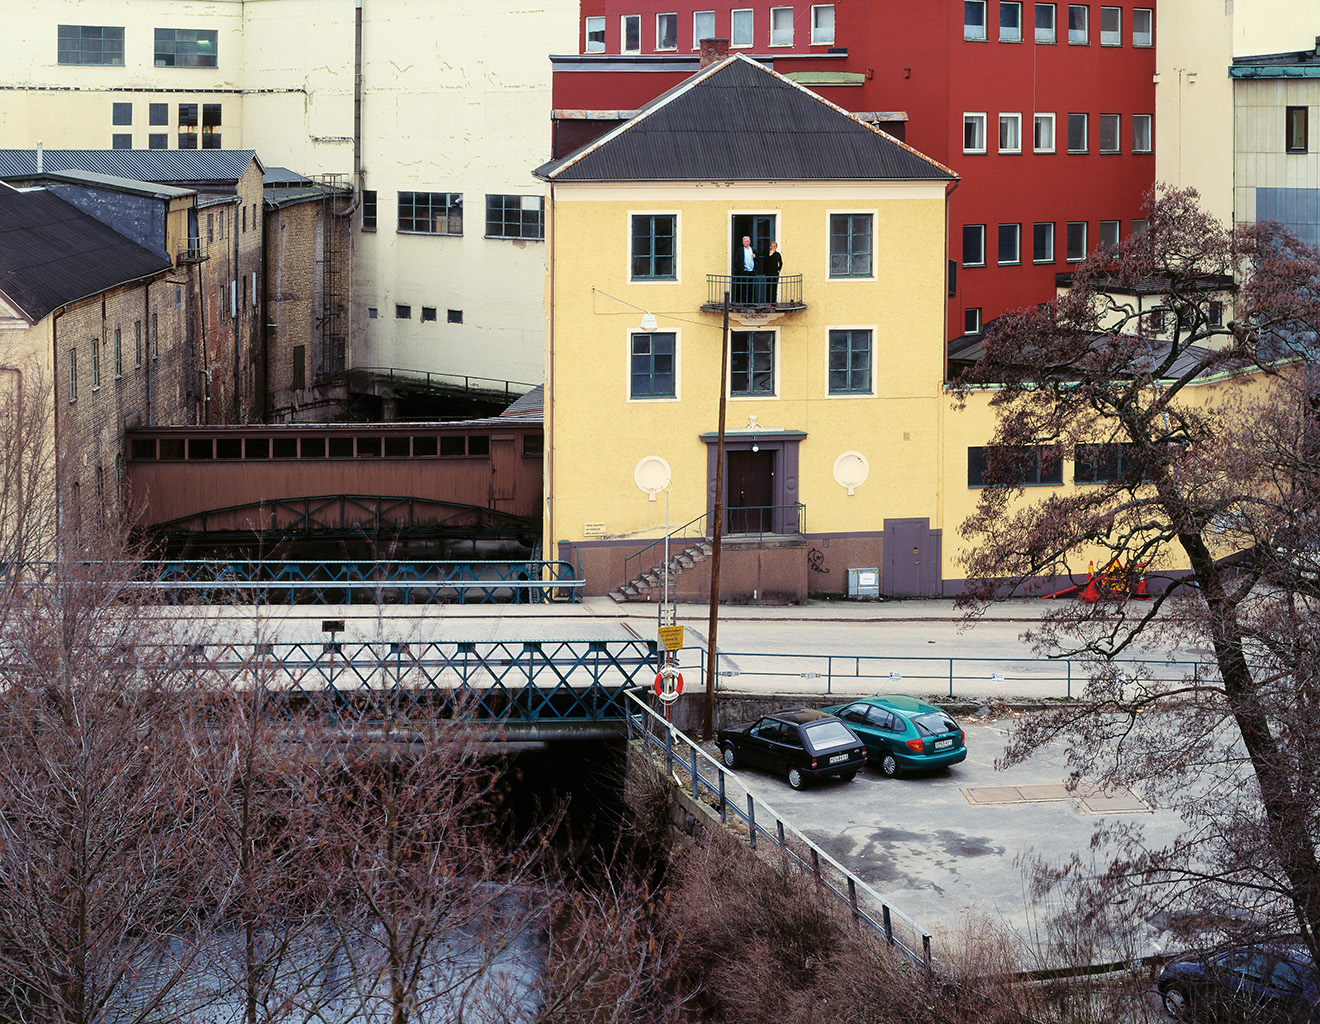 Konstilkes factory, Borås, April 2002